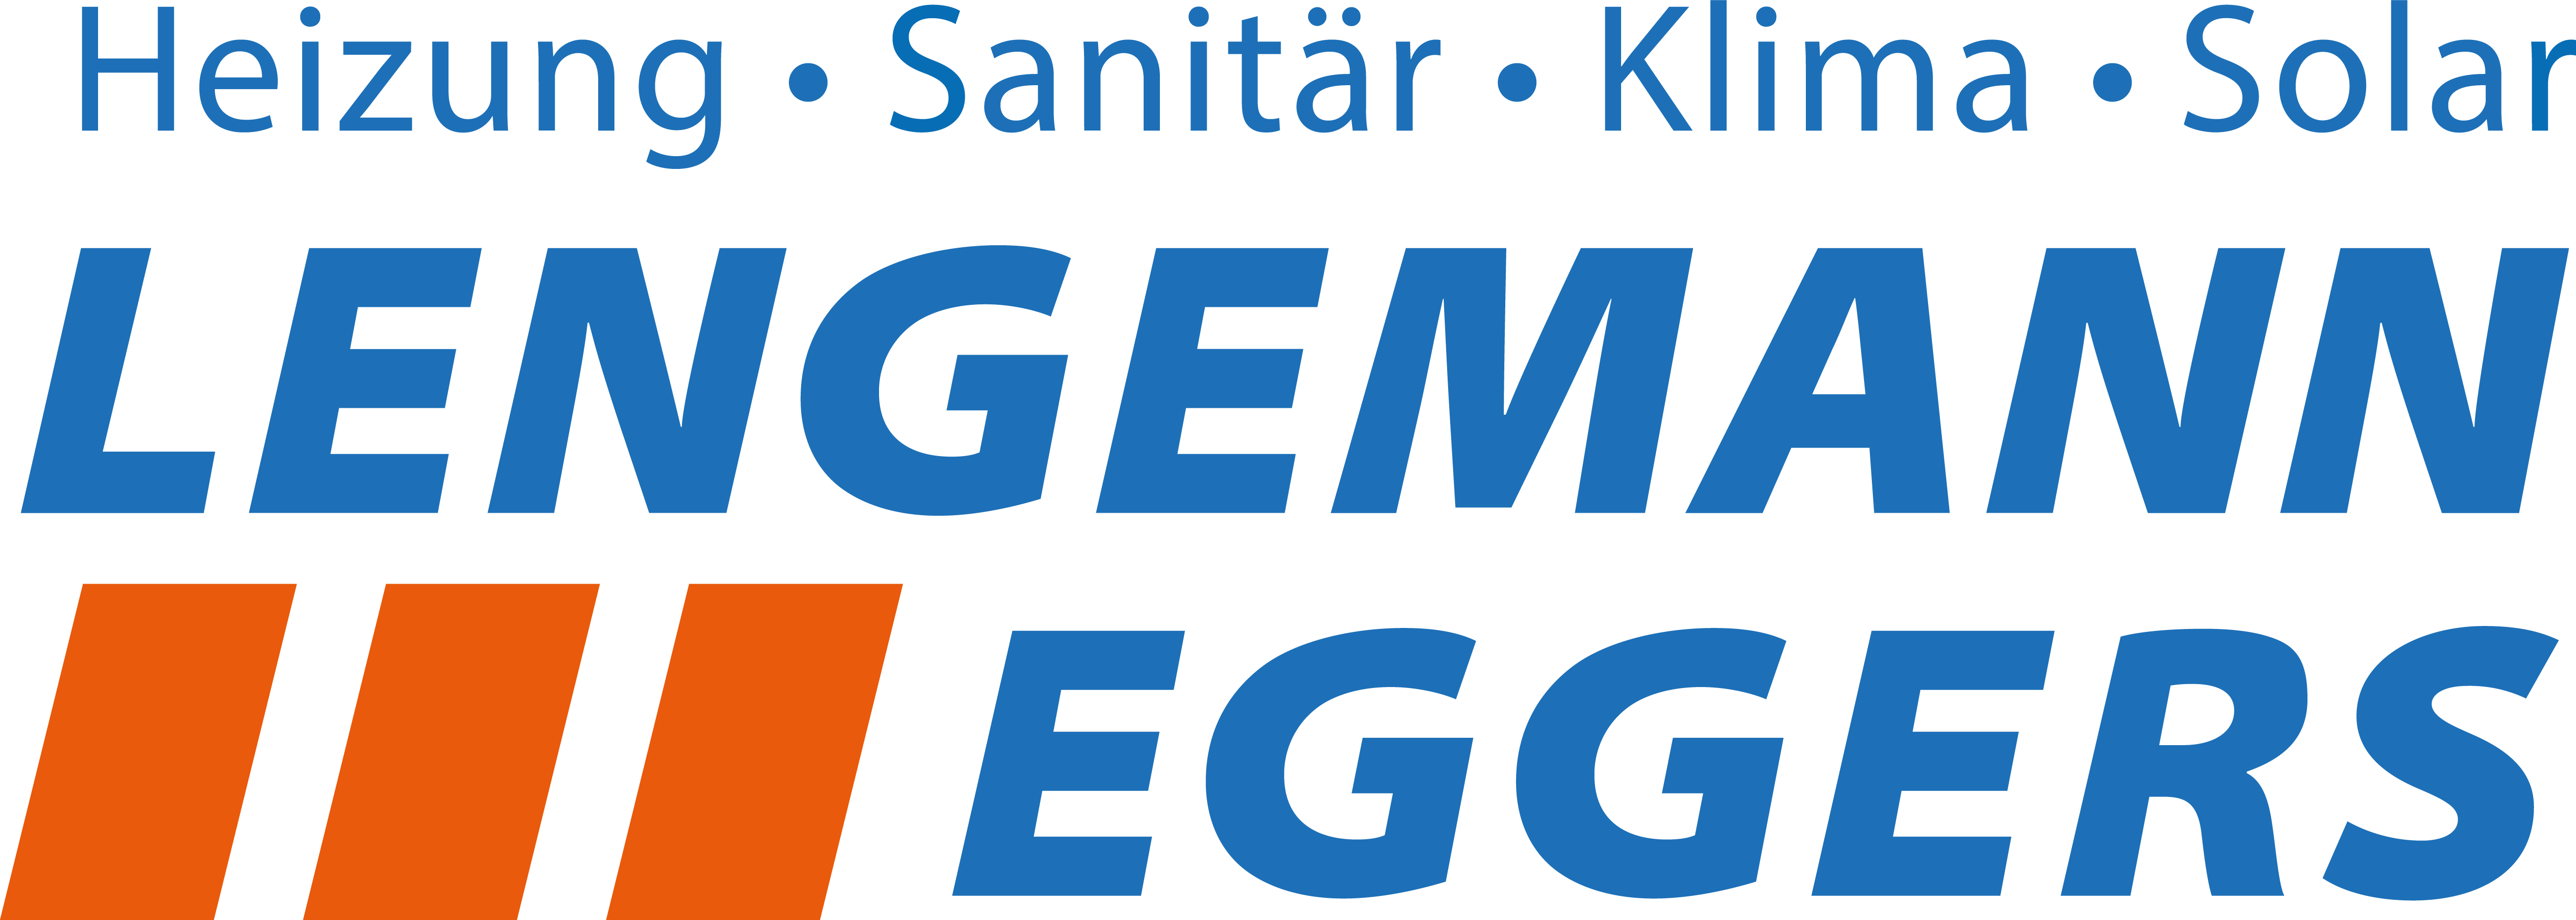 Lengemann & Eggers GmbH & Co. KG